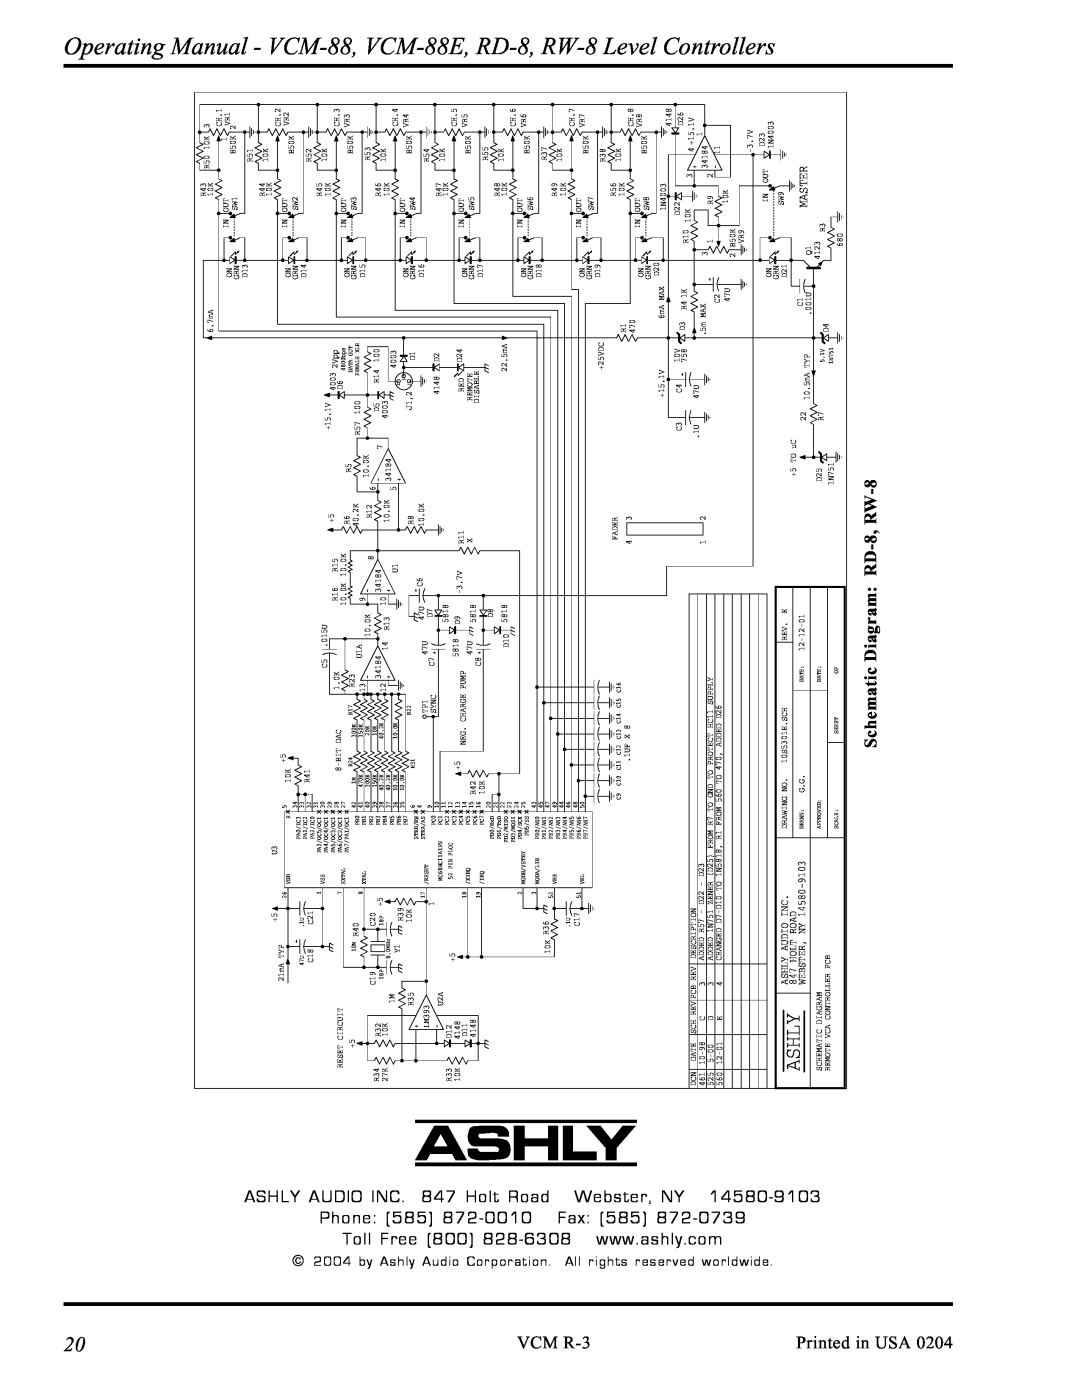 Ashly manual Operating, Manual, VCM-88E, RD-8, Level, 9103, Controllers, RW-8, Master, Ashly Audio Inc, Holt Road 